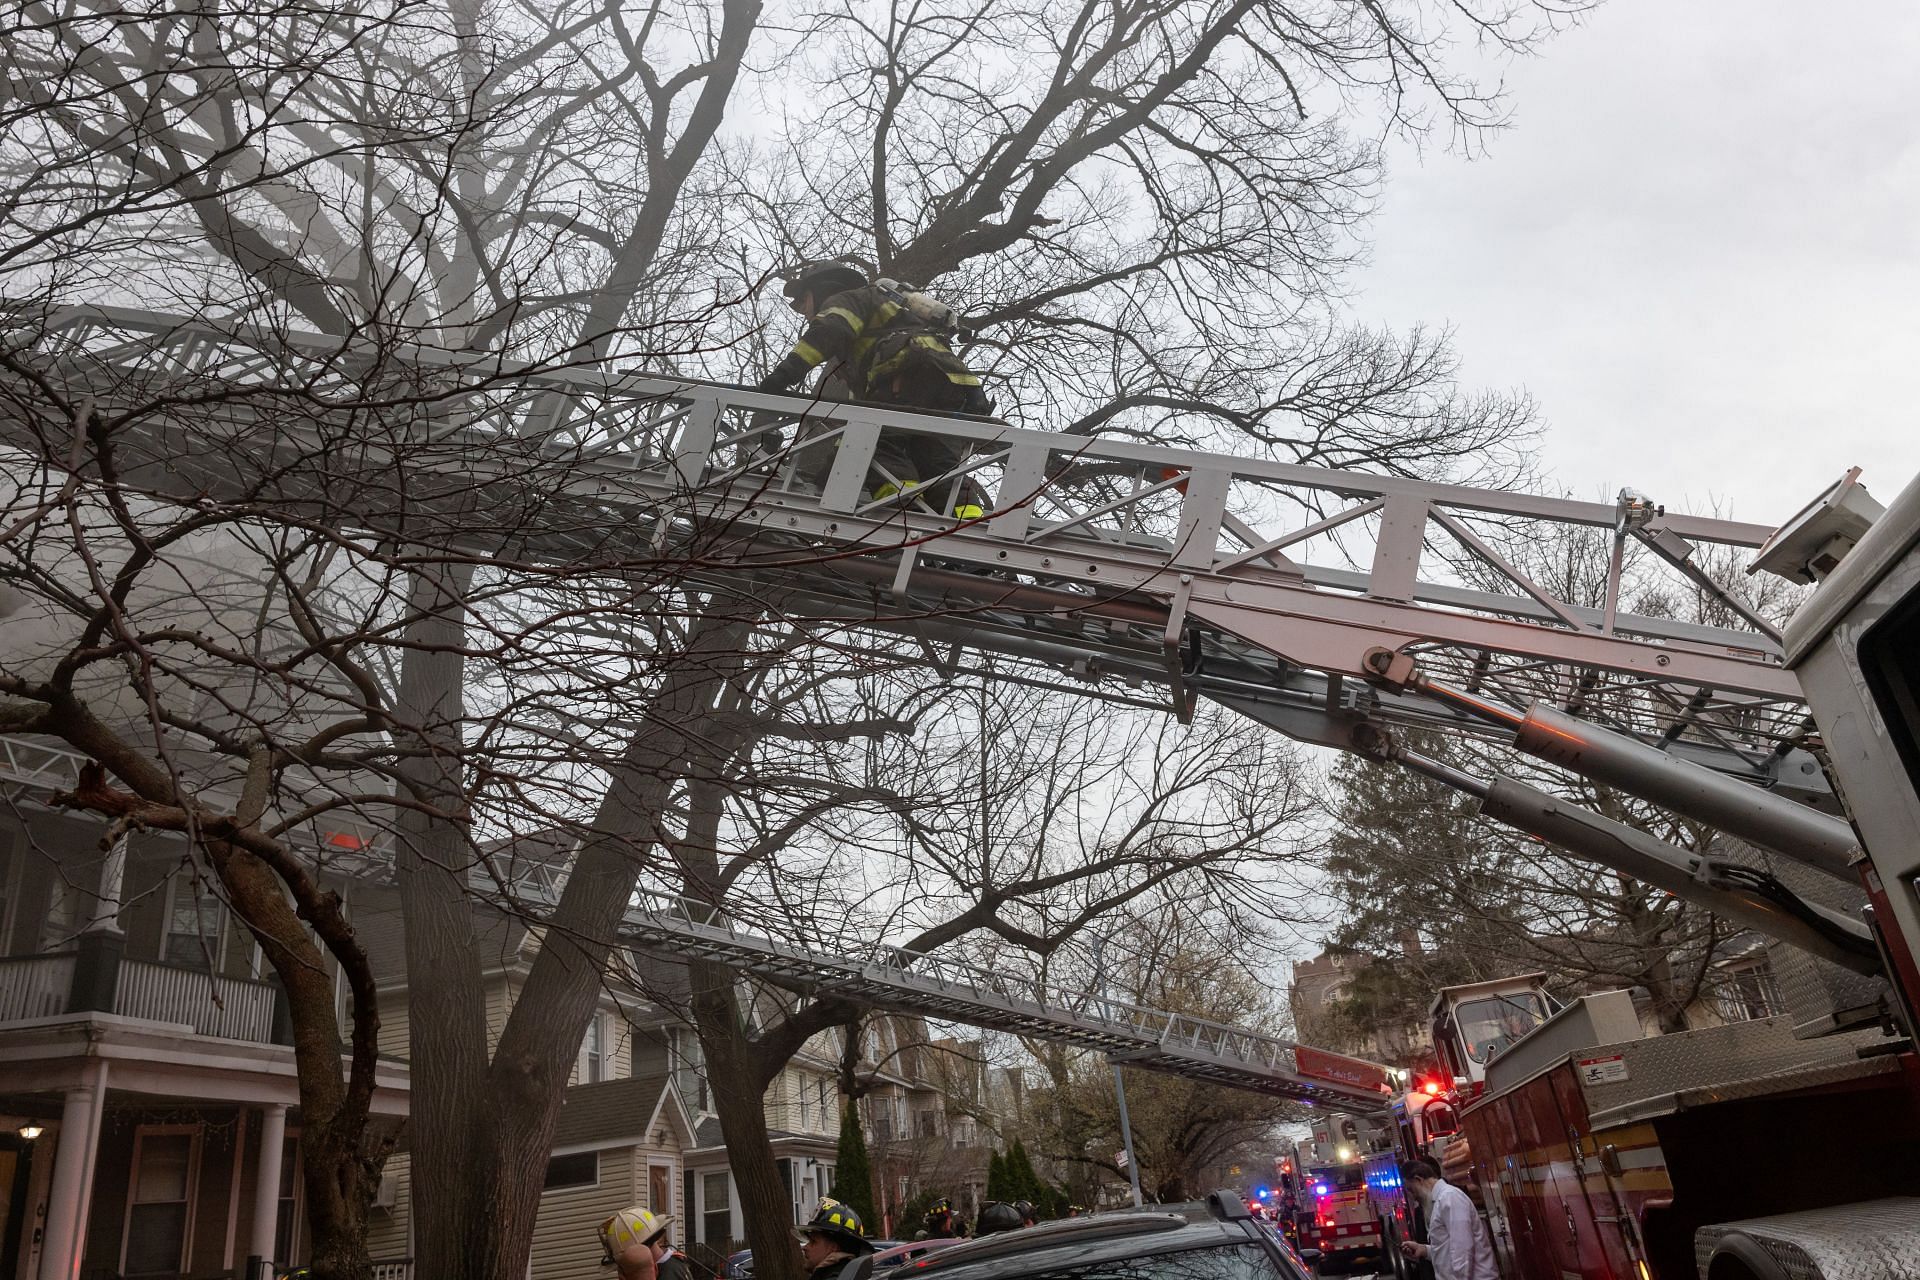 3-Alarm Fire Consumes Homes In Brooklyn, NY Neighborhood